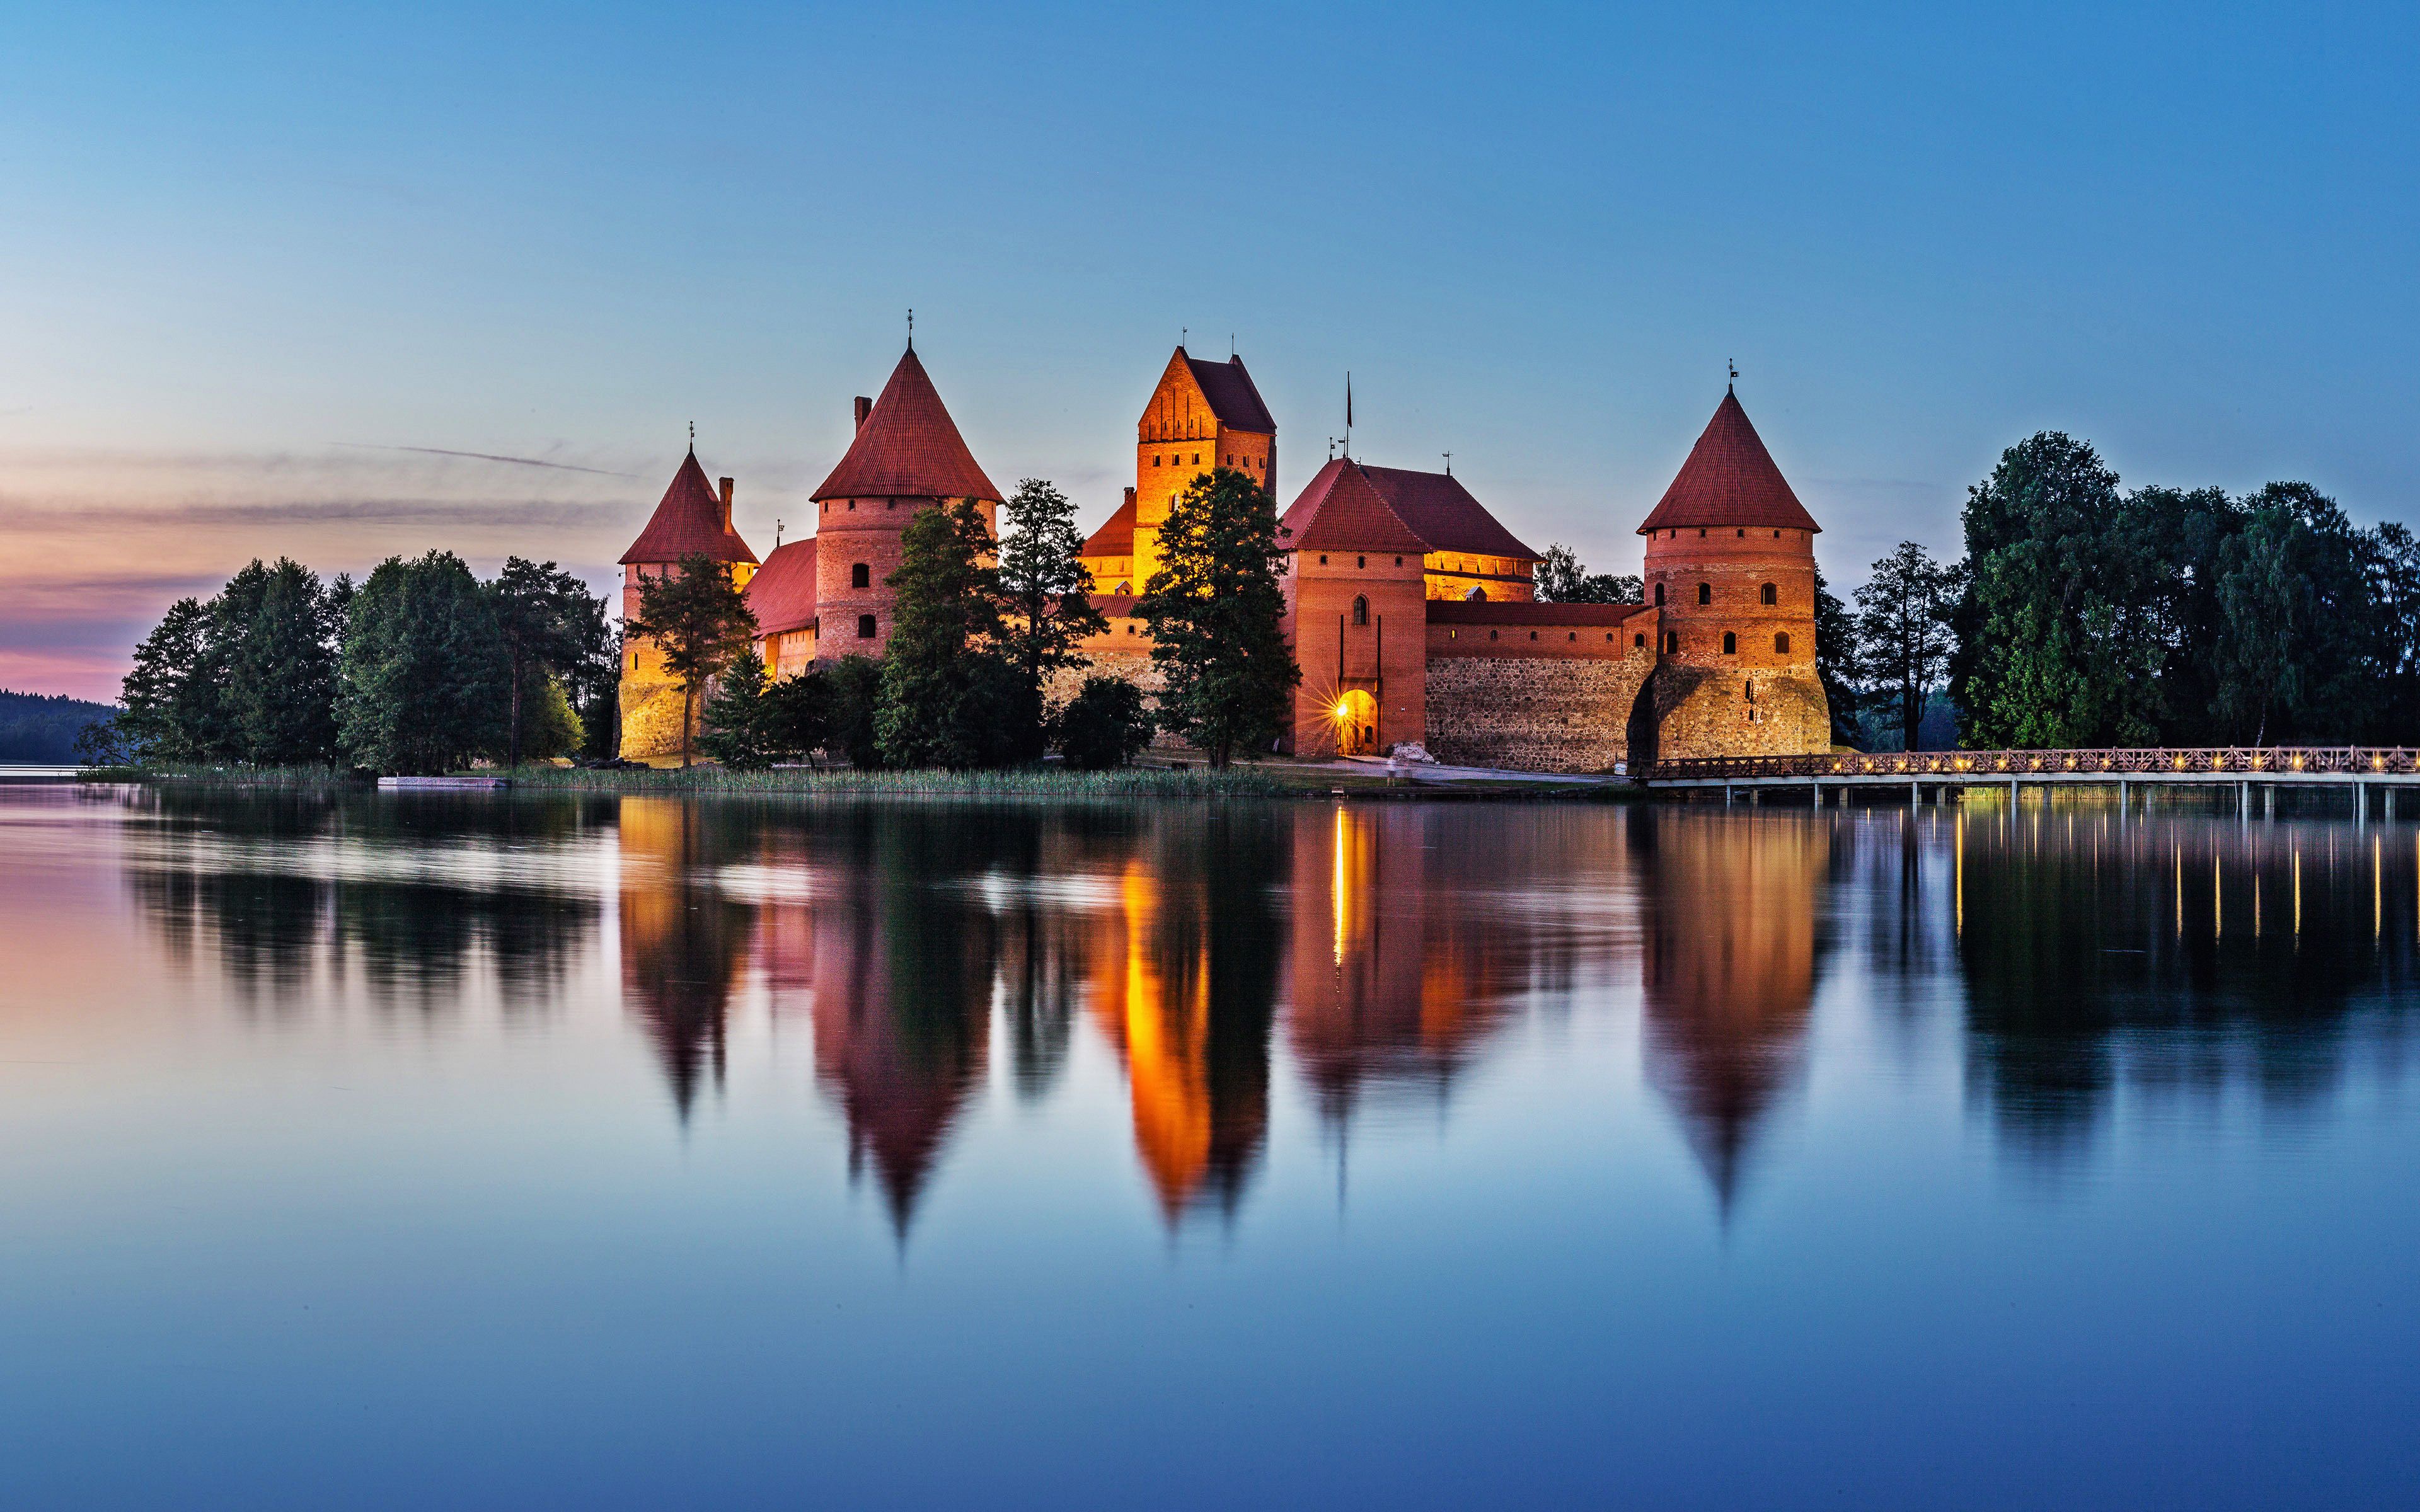 Download wallpaper Trakai Castle, 4k, lake, lithuanian landmarks